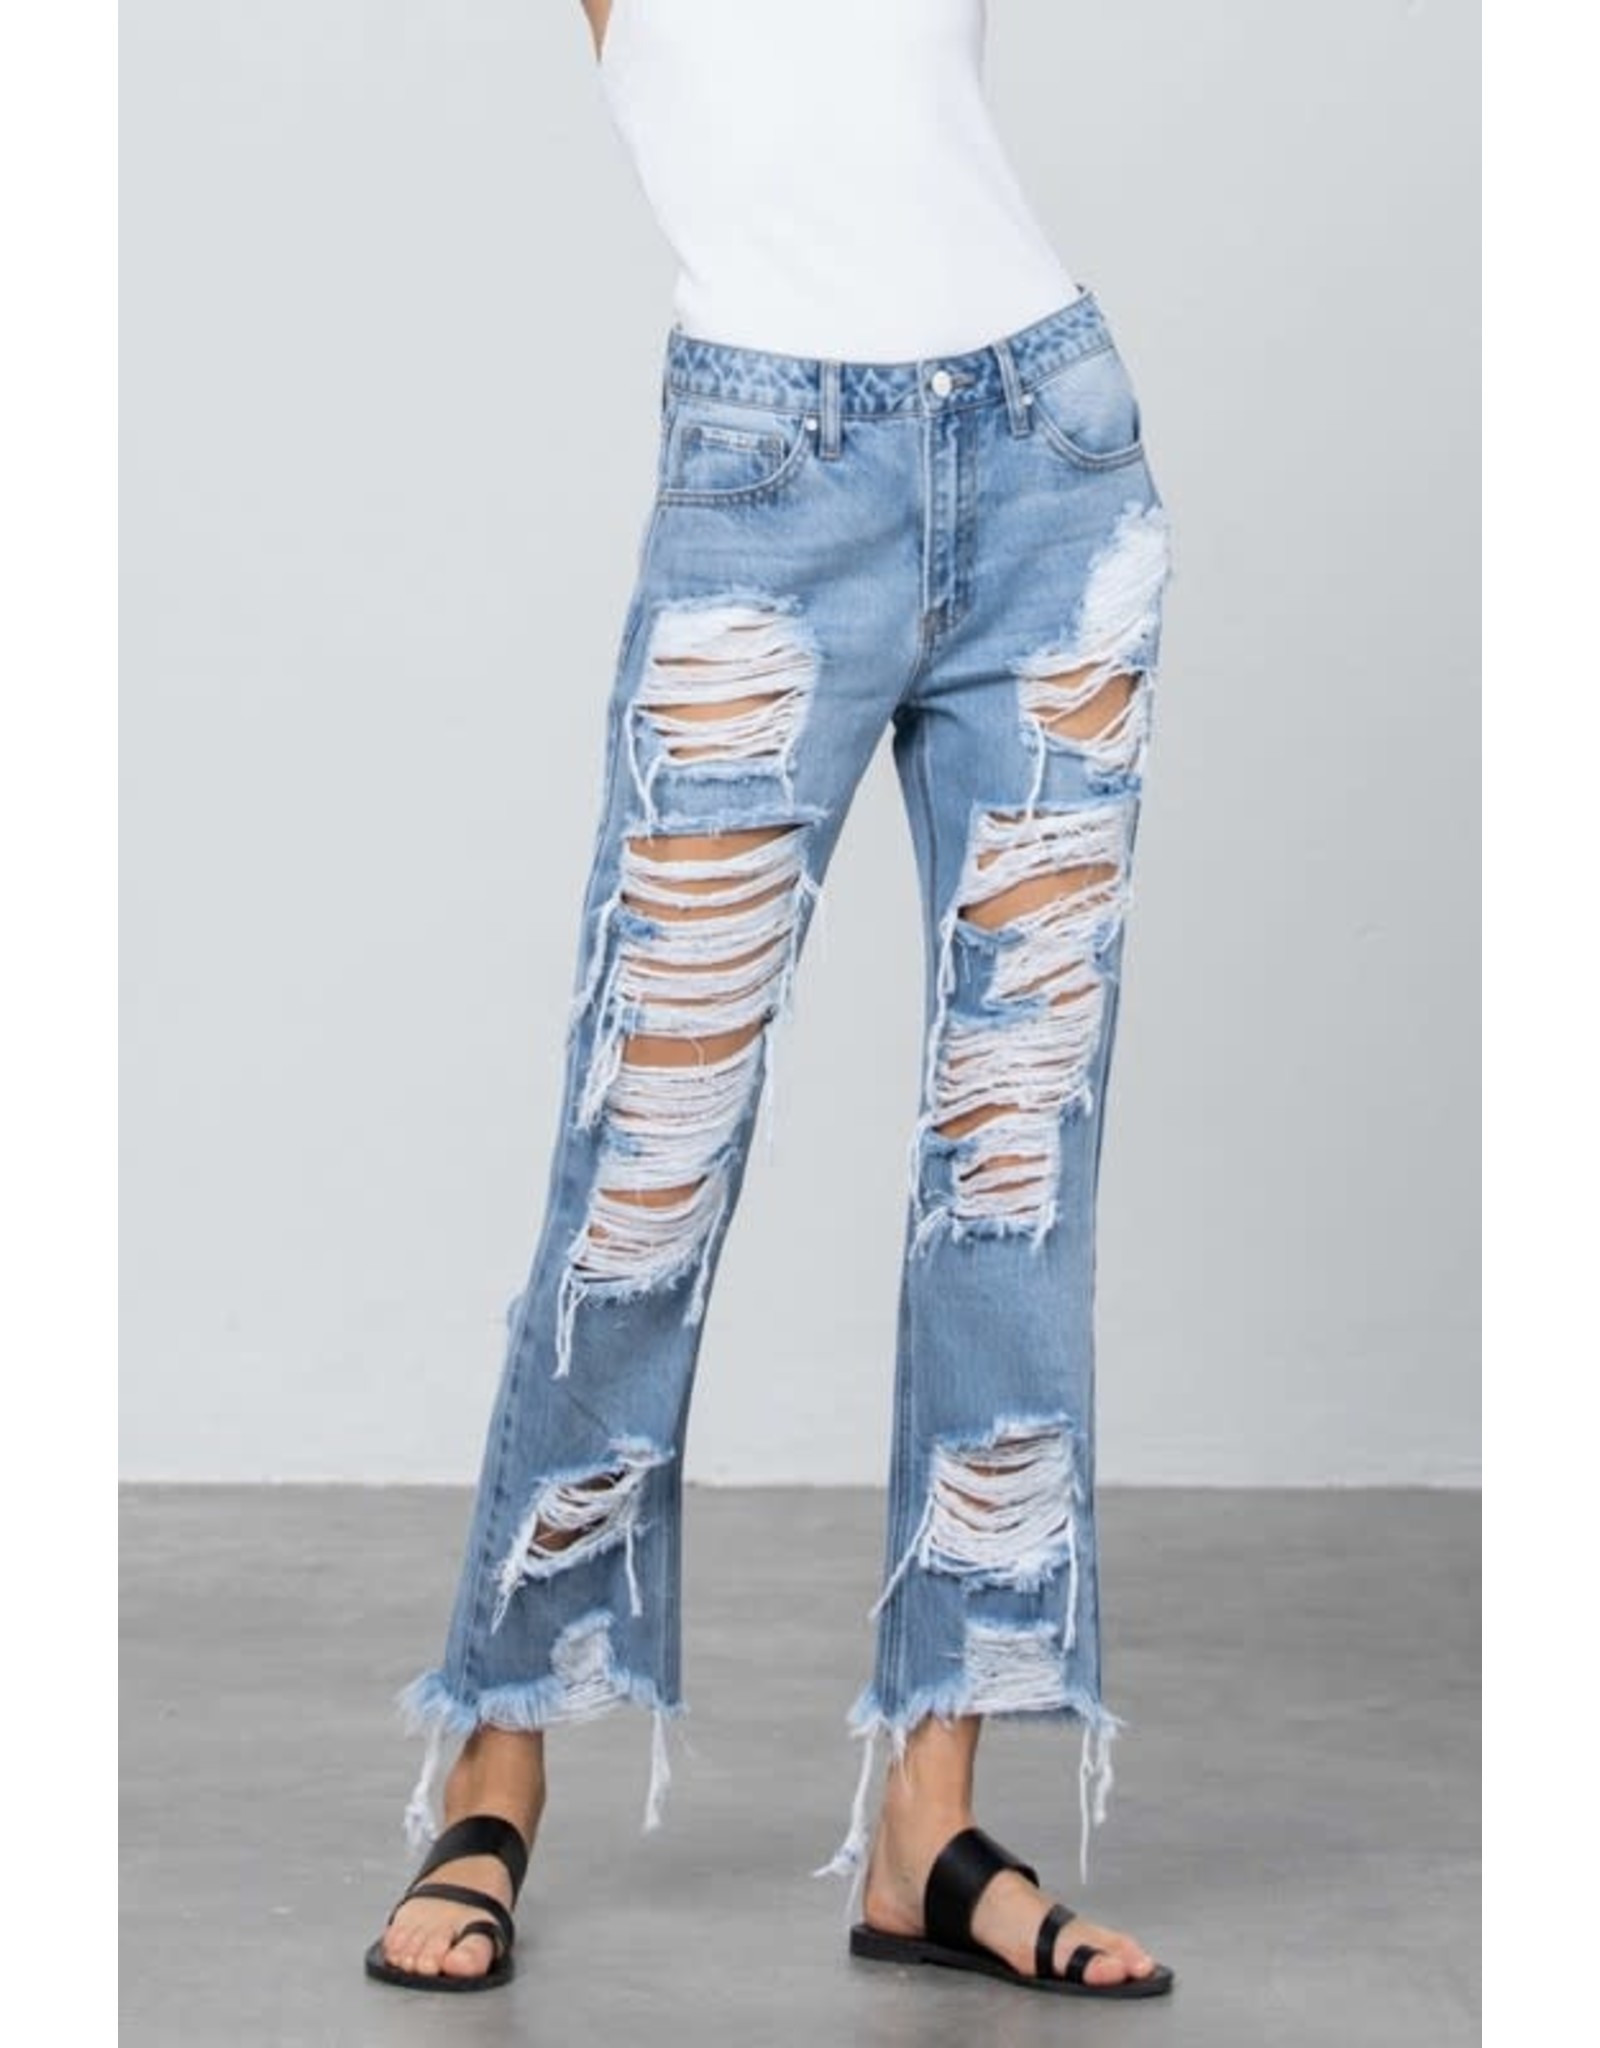 Insane Gene Heavily Distressed Straight jeans